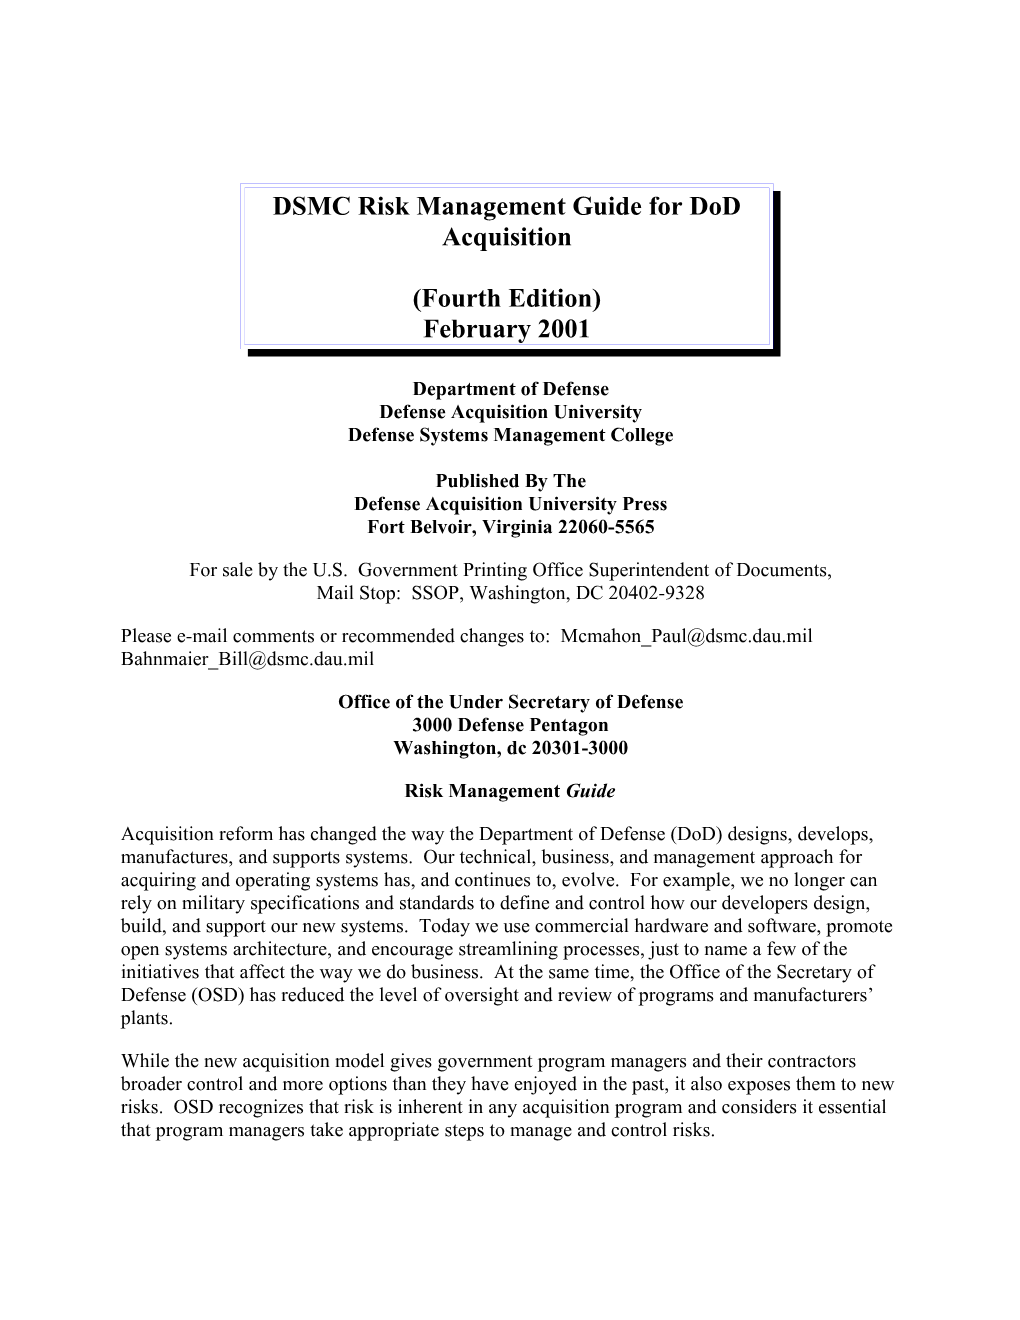 DSMC Risk Management Guide for Dod Acquisition